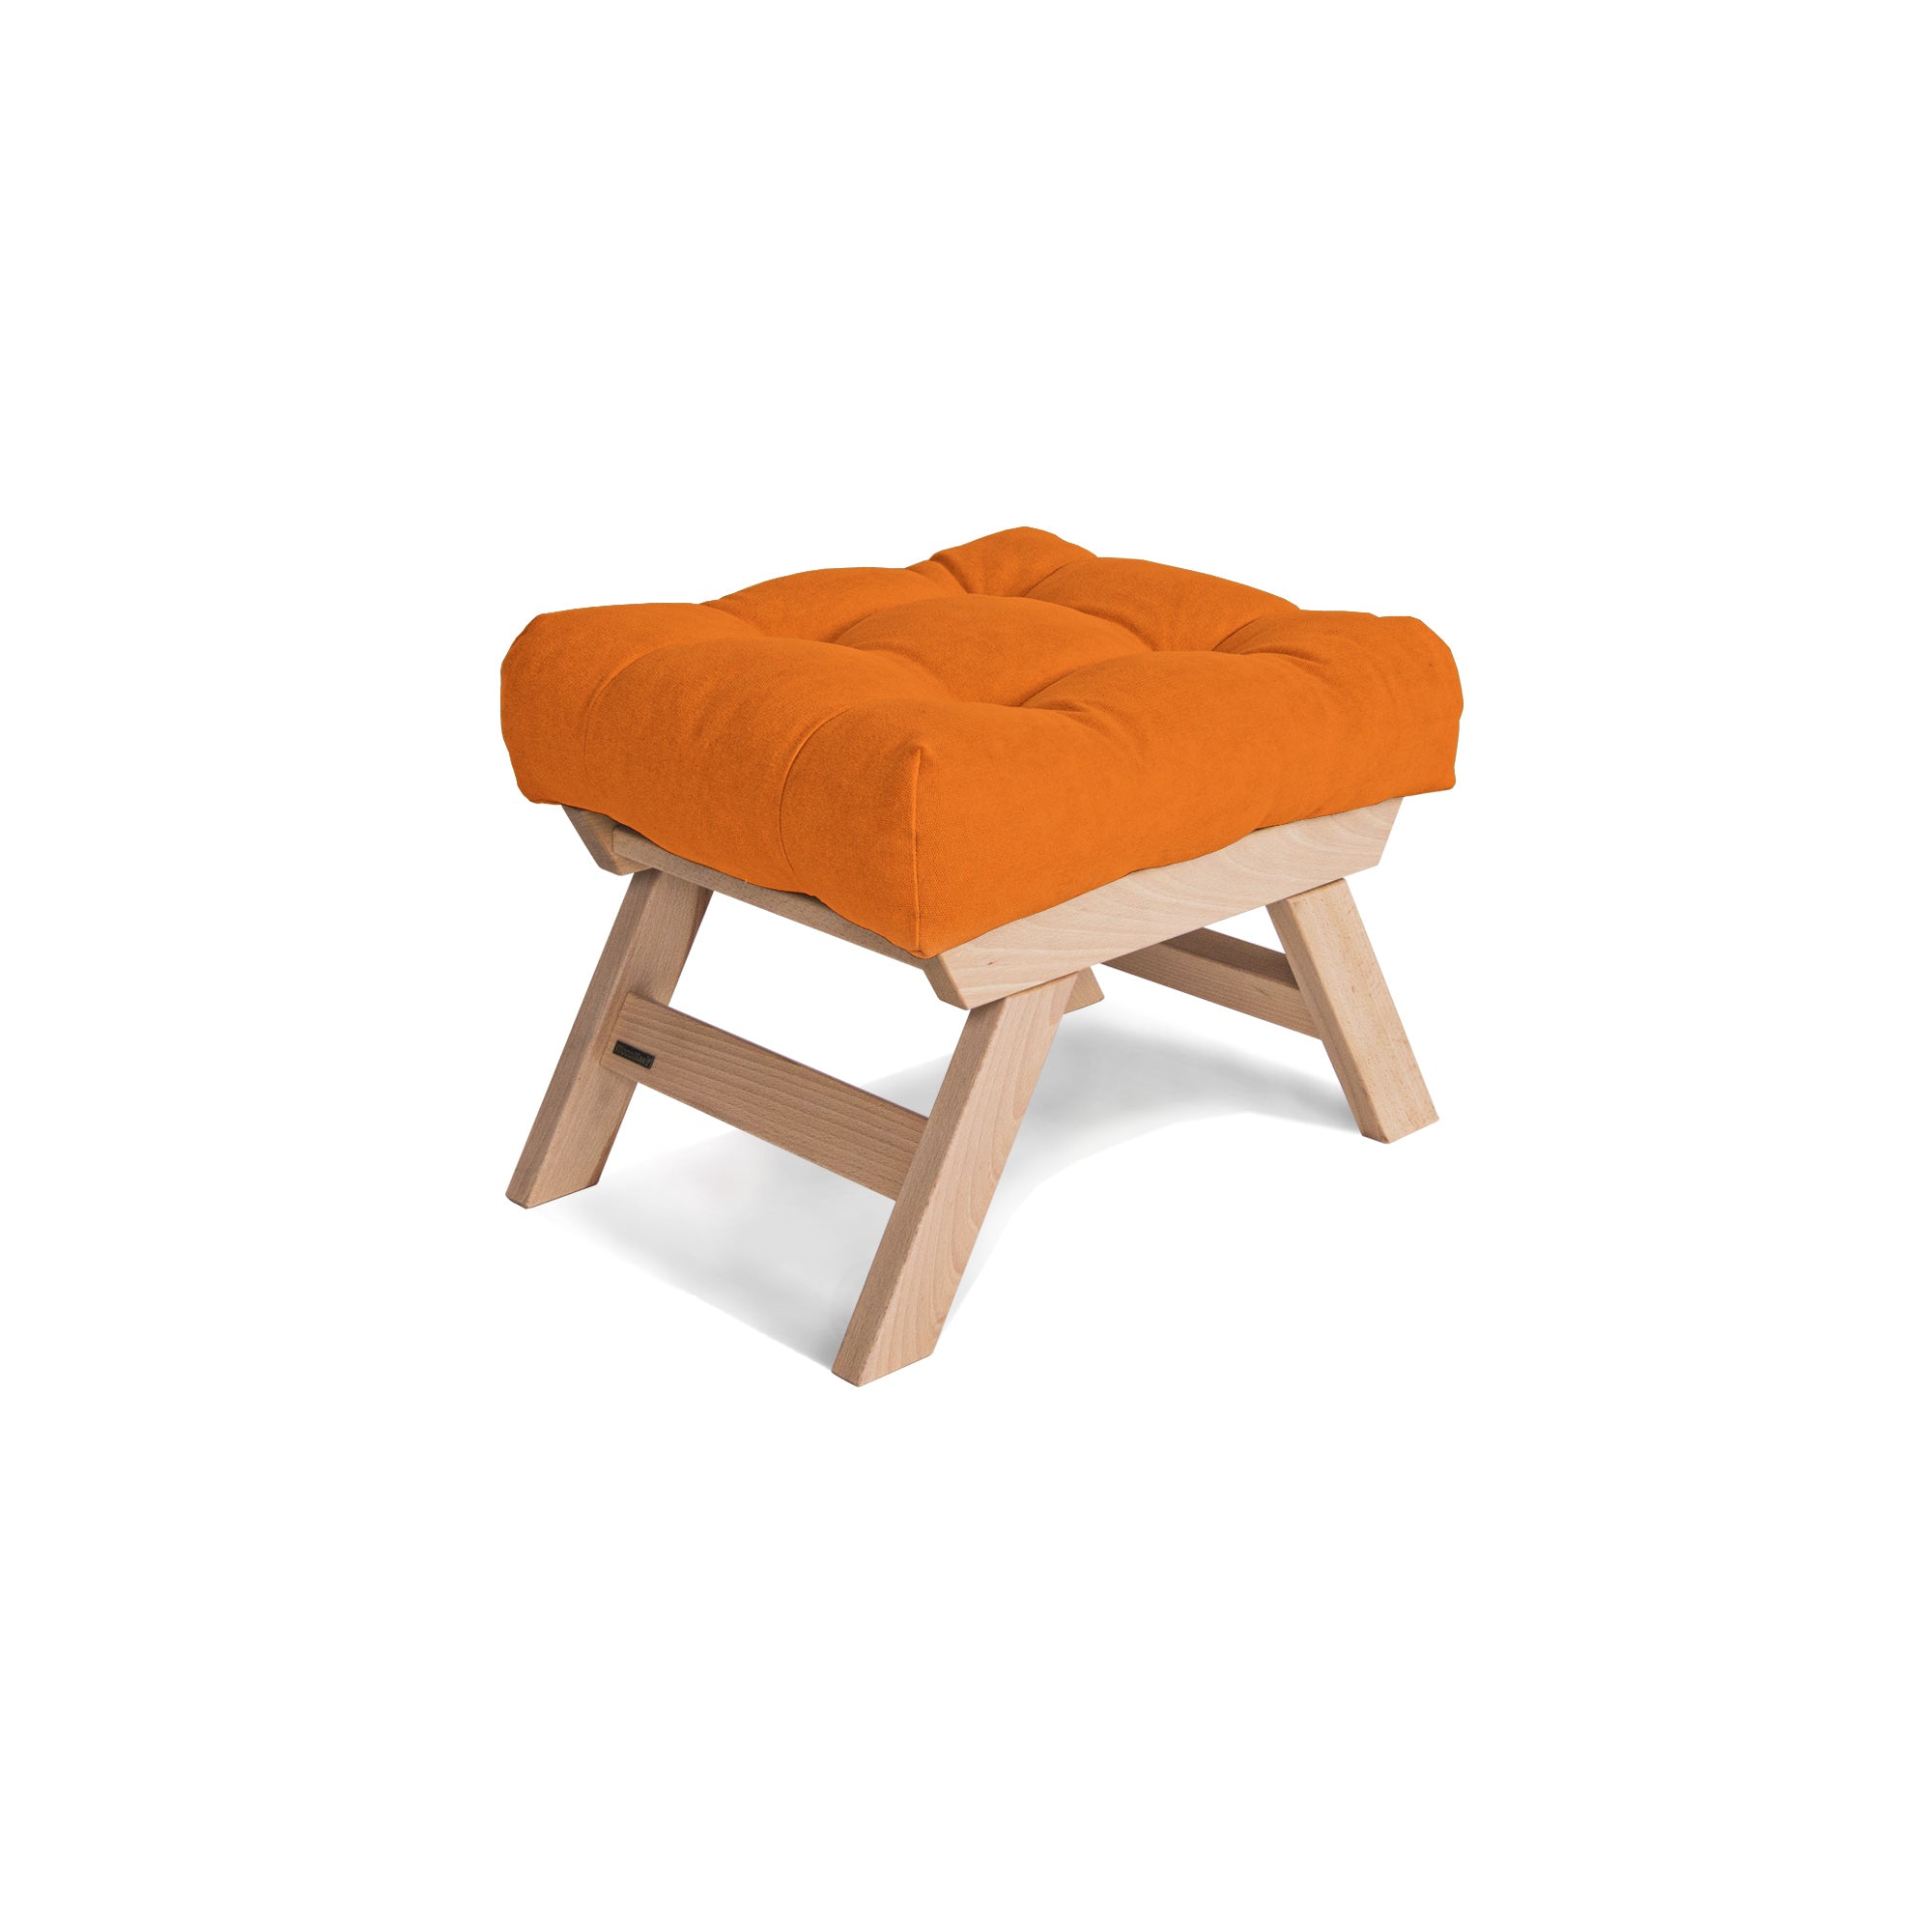 ALLEGRO Pouffe, Beech Wood upholstery colour orange